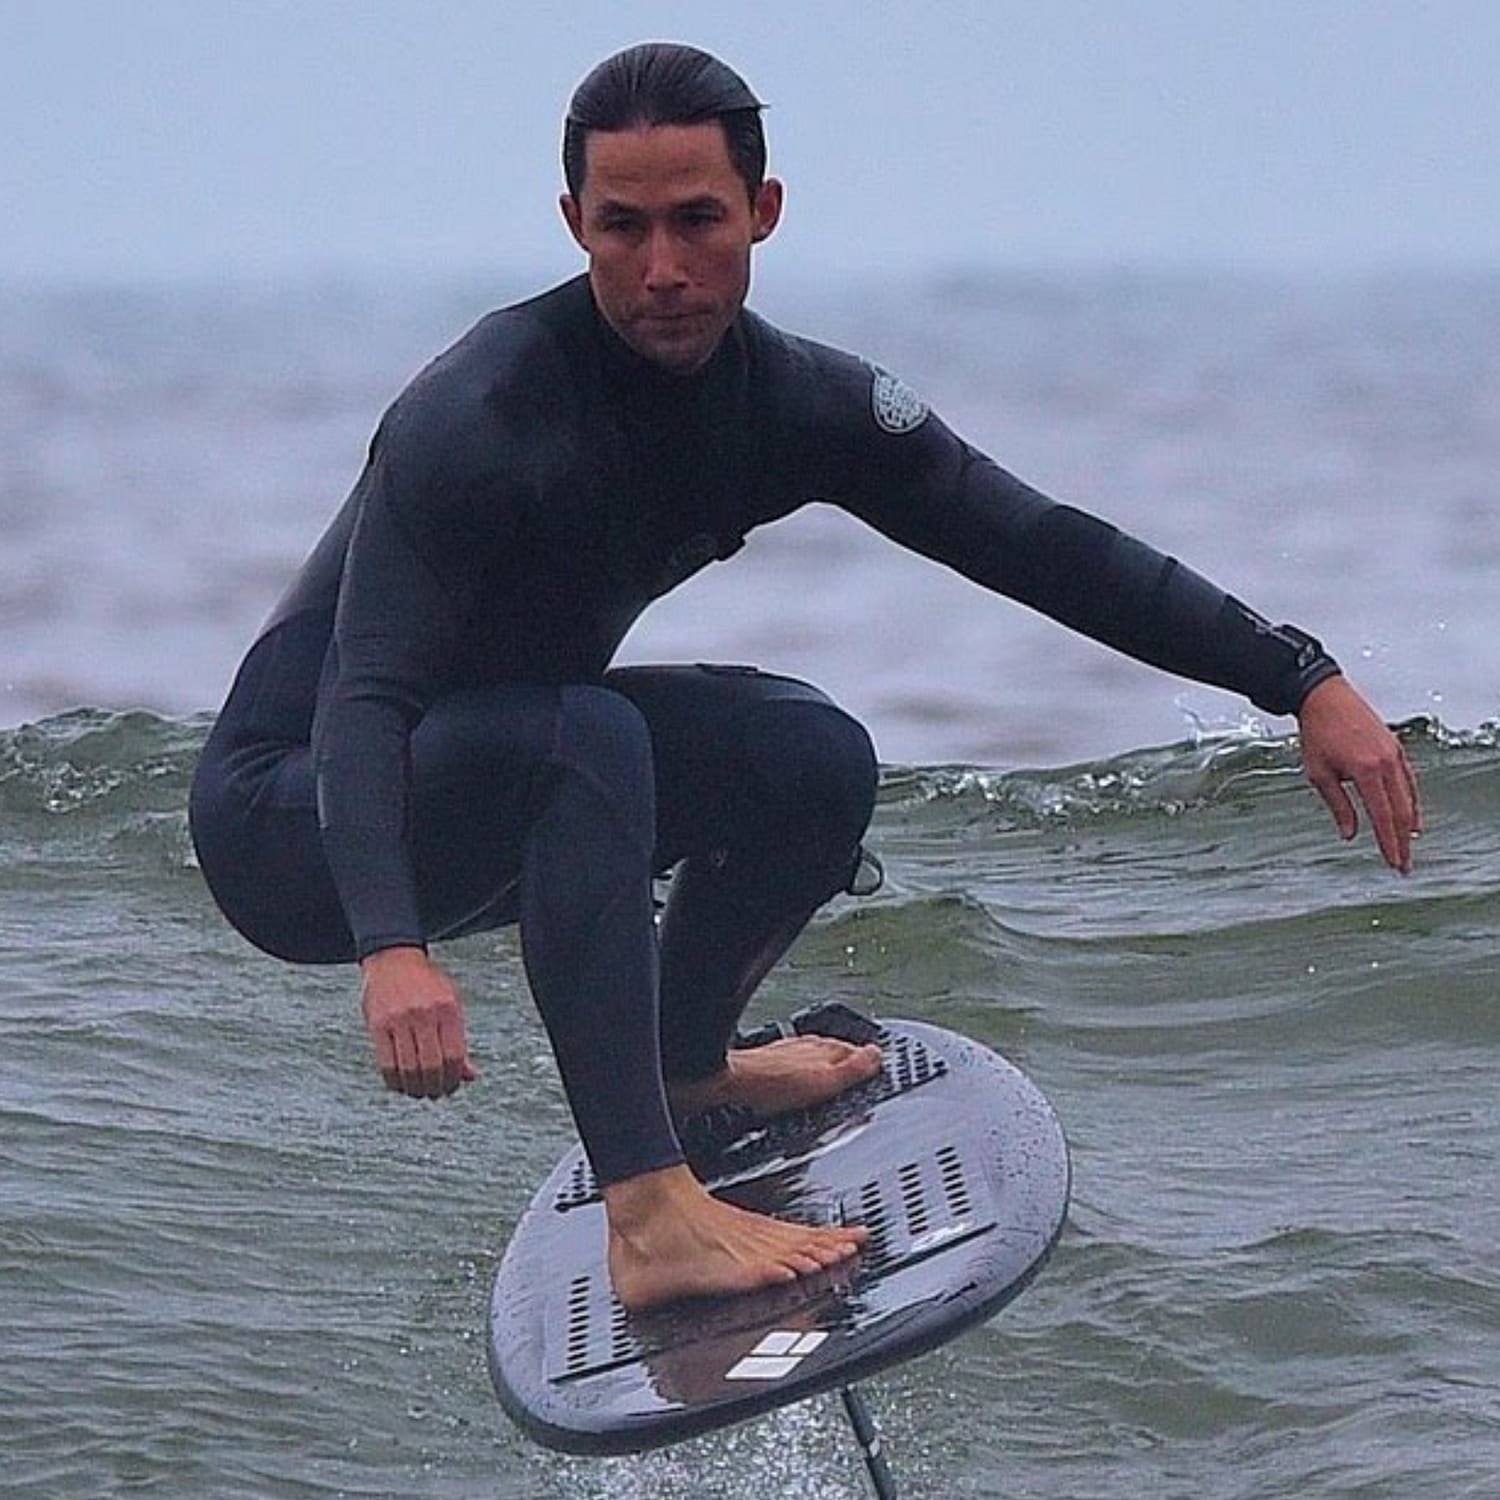 Foil Surfing Santa Monica